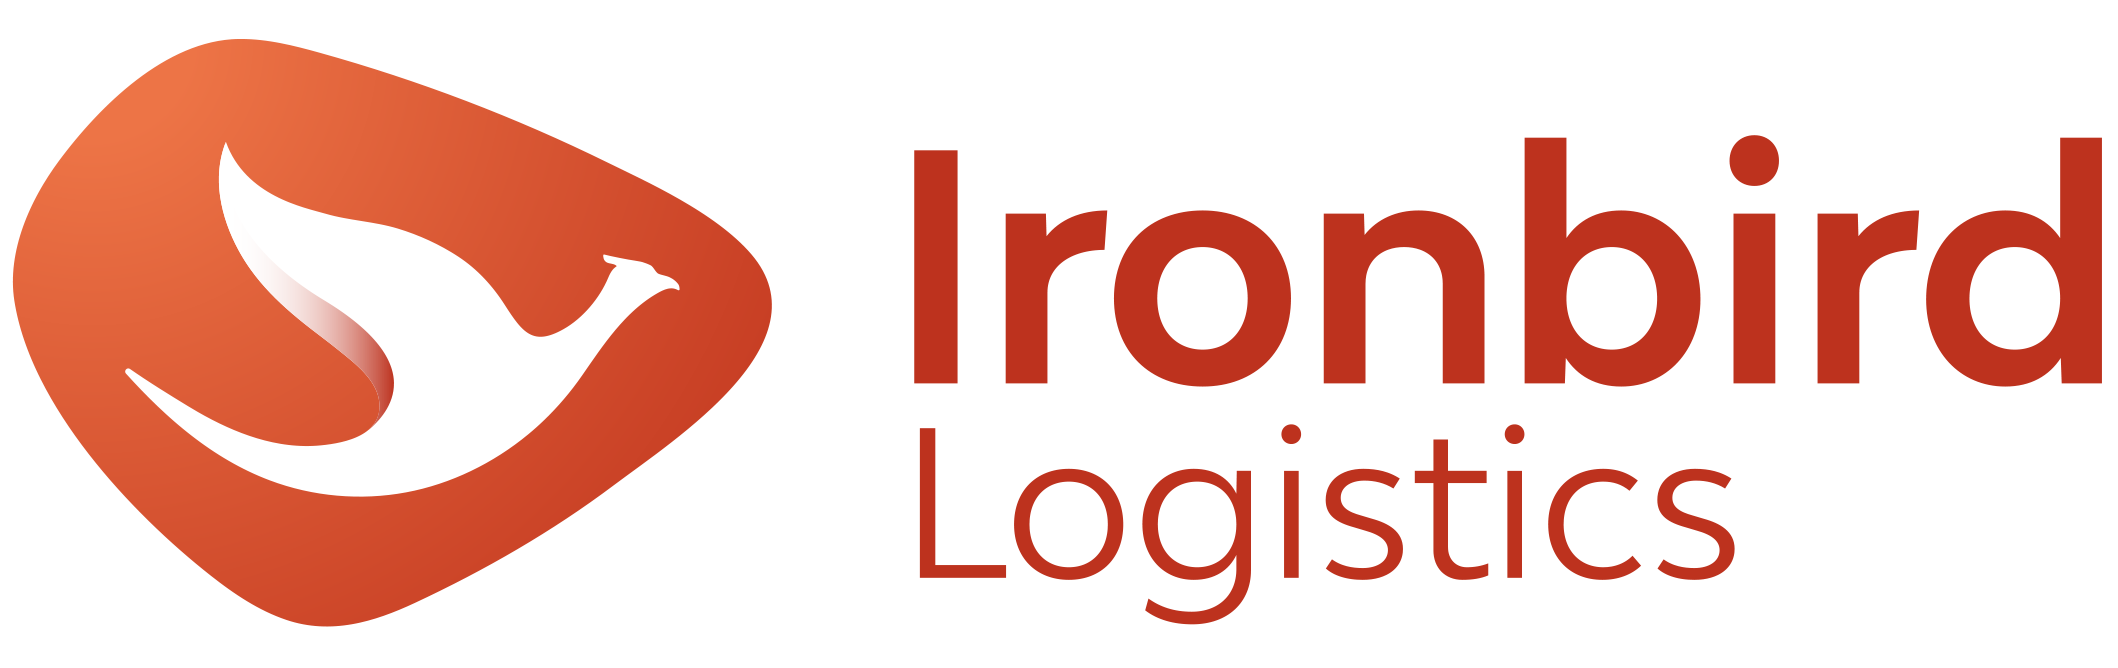 Iron Bird Logistics